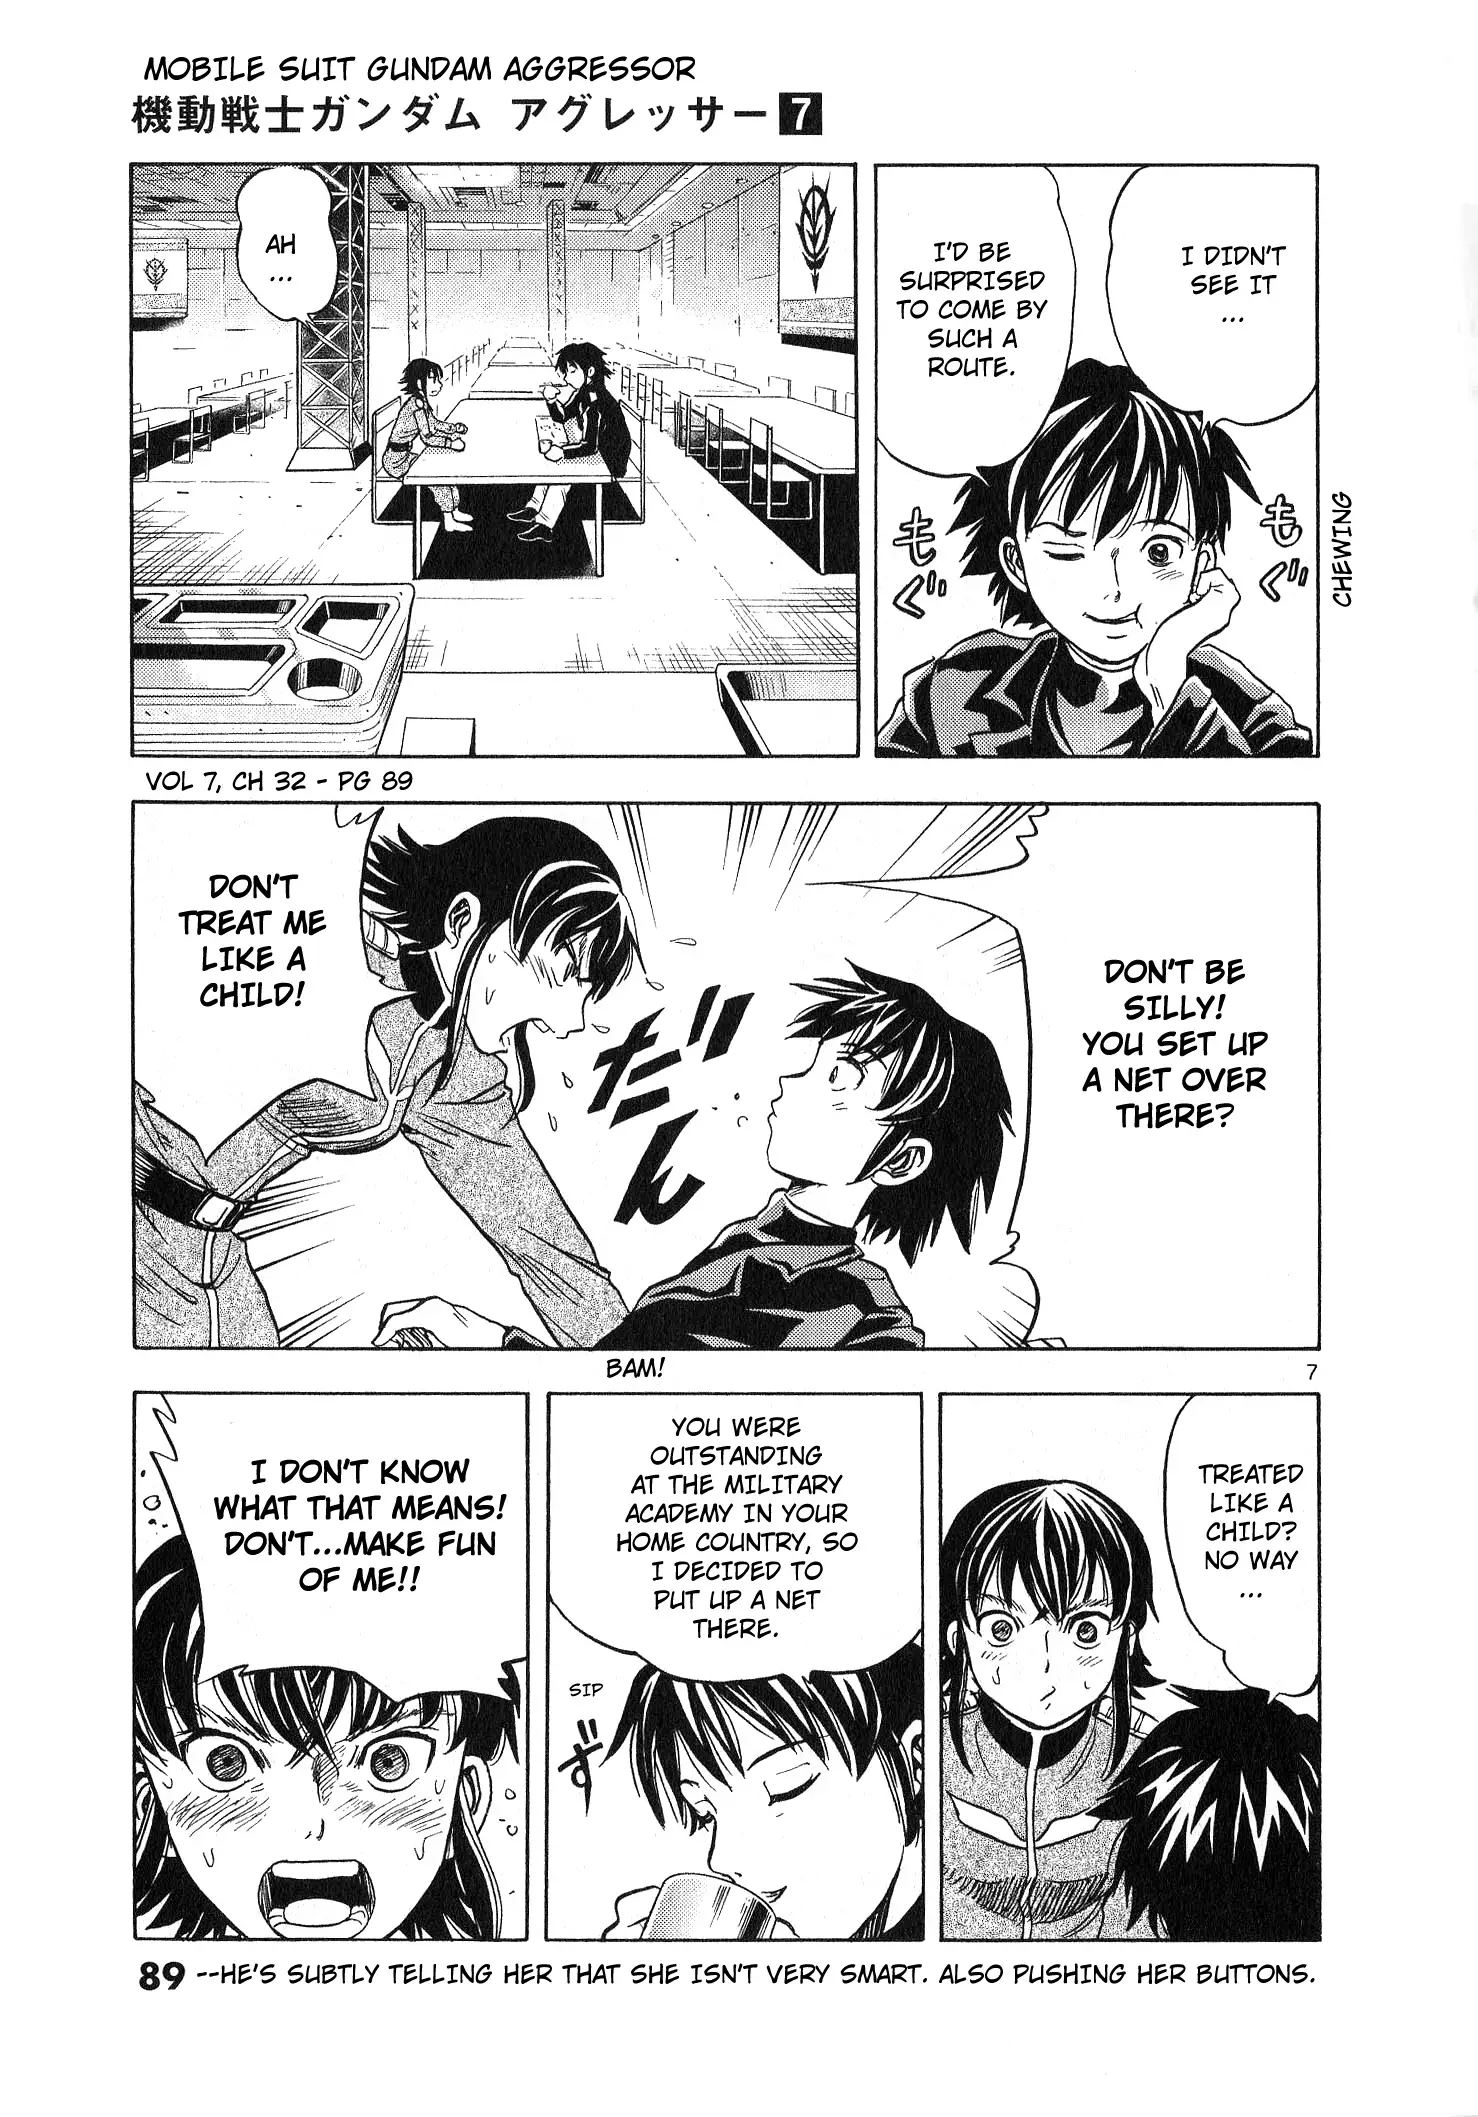 Mobile Suit Gundam Aggressor - 32 page 7-024b6d1f